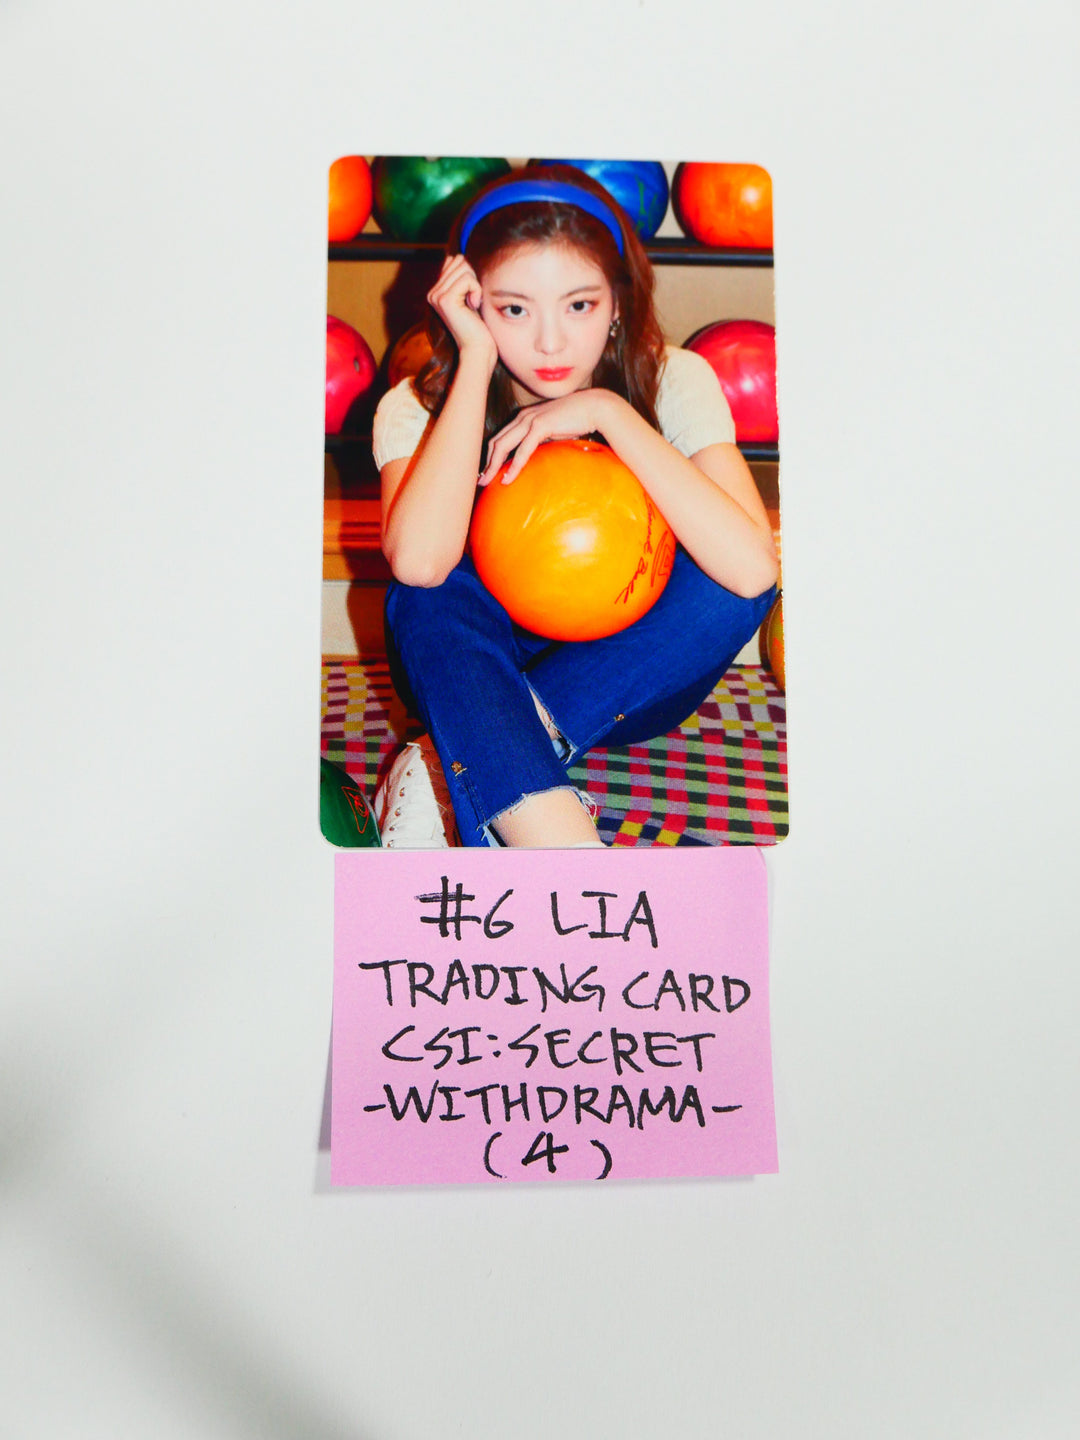 ITZY 'CSI 코드네임의 비밀' - 트레이딩 카드 포토카드 (1)